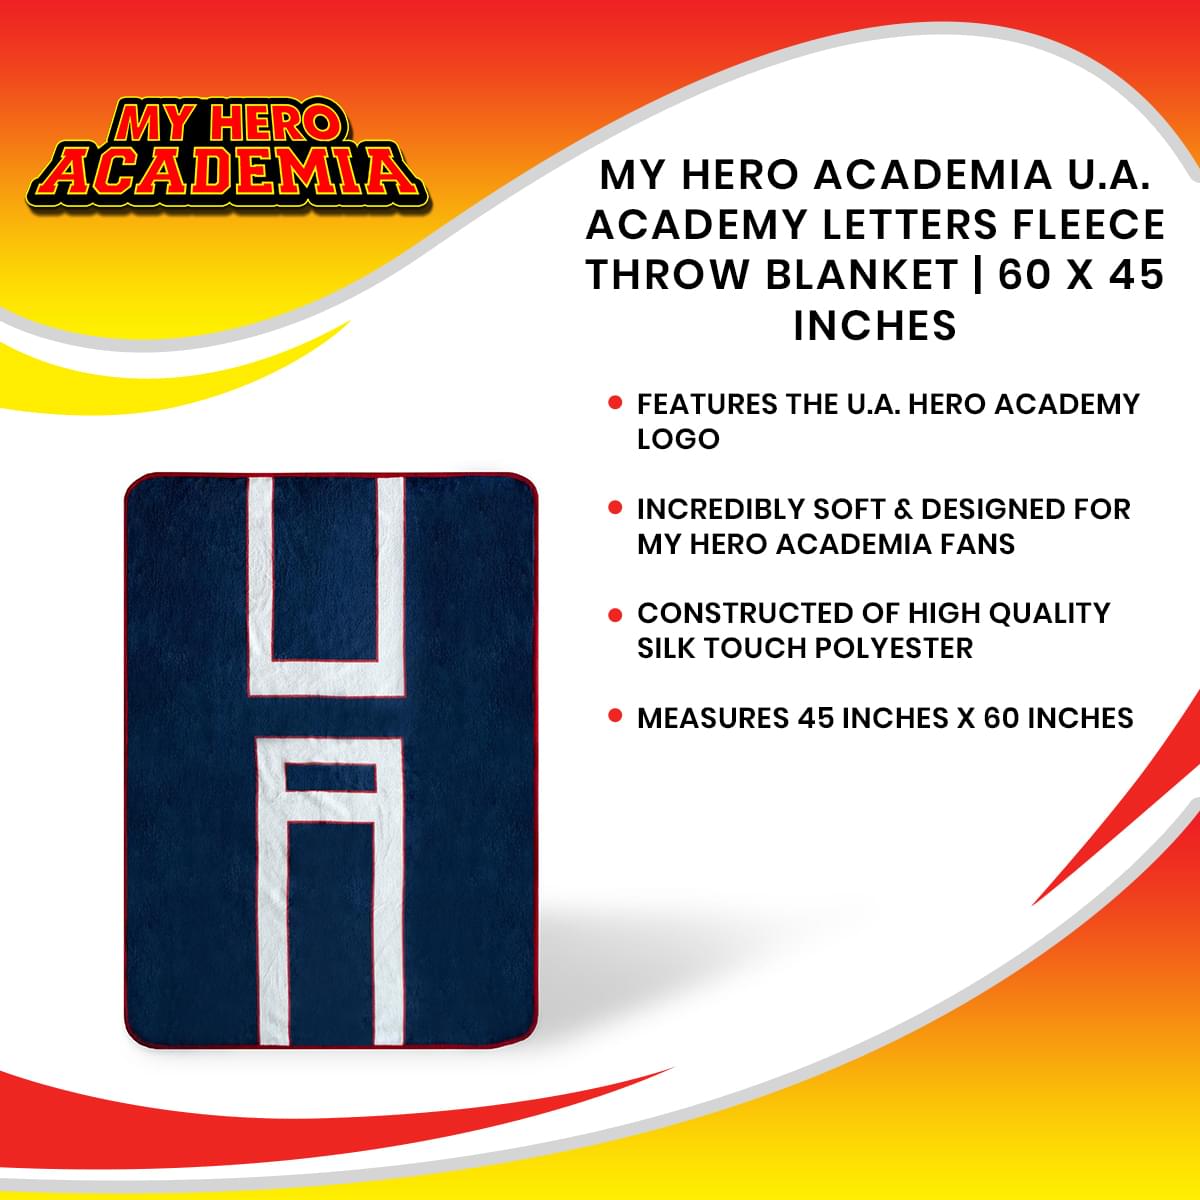 My Hero Academia U.A. Academy Letters Fleece Throw Blanket | 60 x 45 Inches